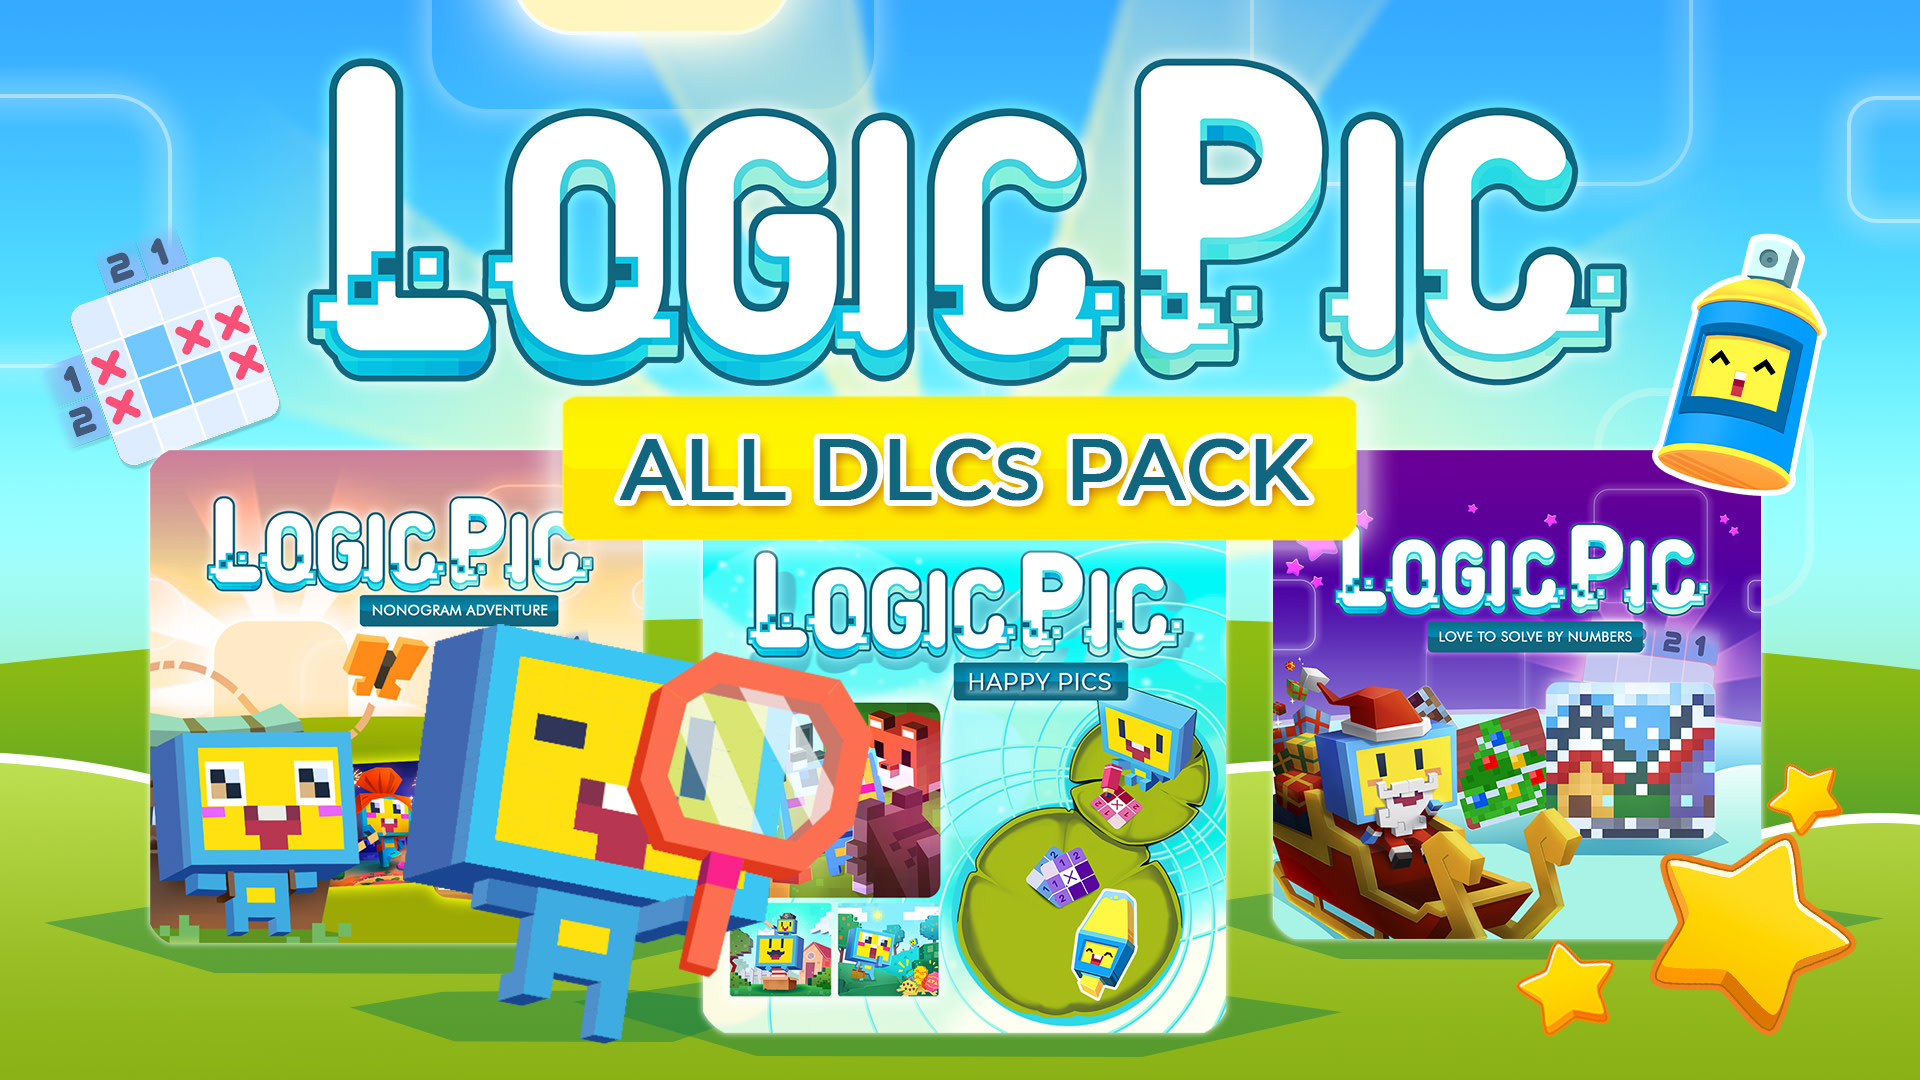 Logic Pic: All DLCs Pack